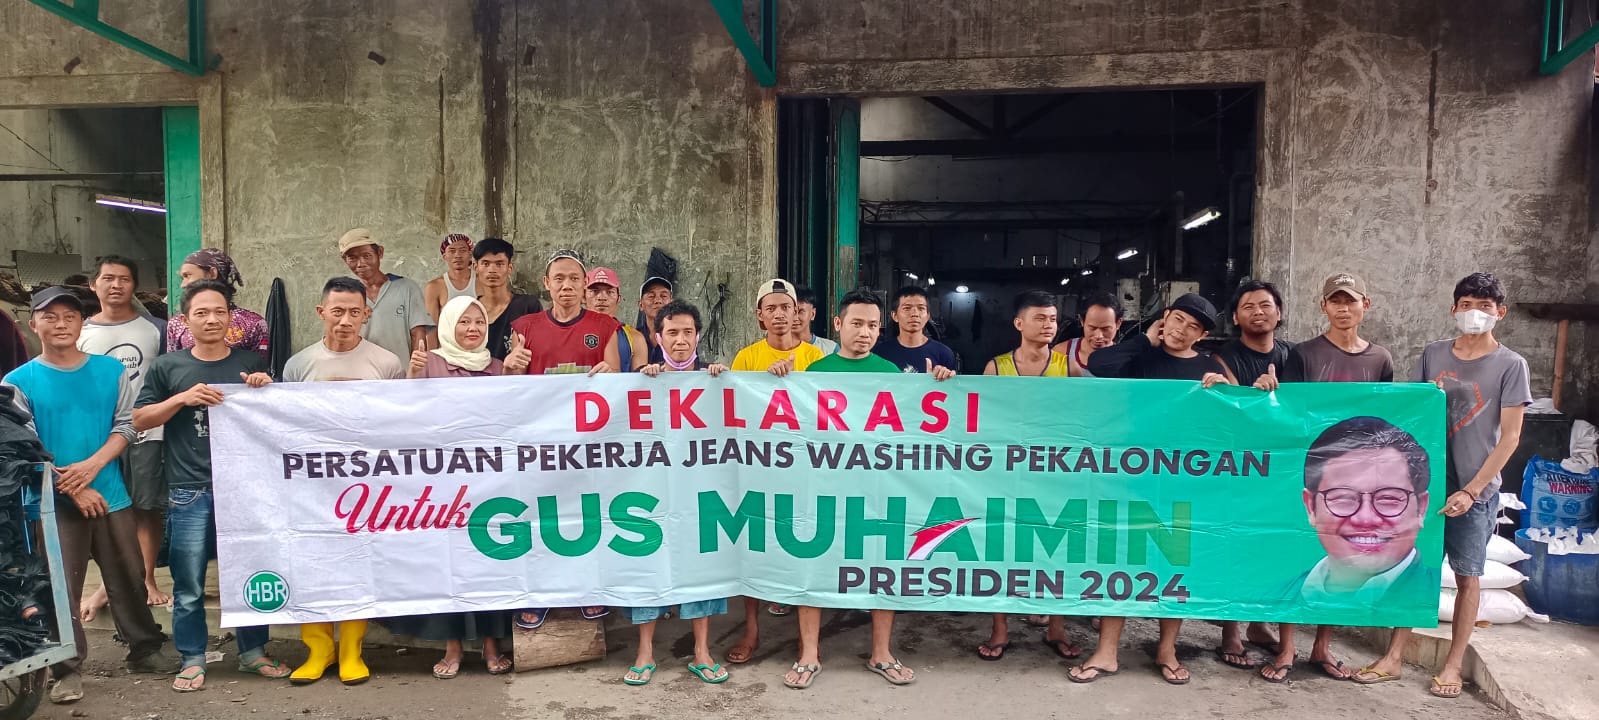 Persatuan Pekerja Jeans Washing Deklarasikan Gus Muhaimin Presiden 2024